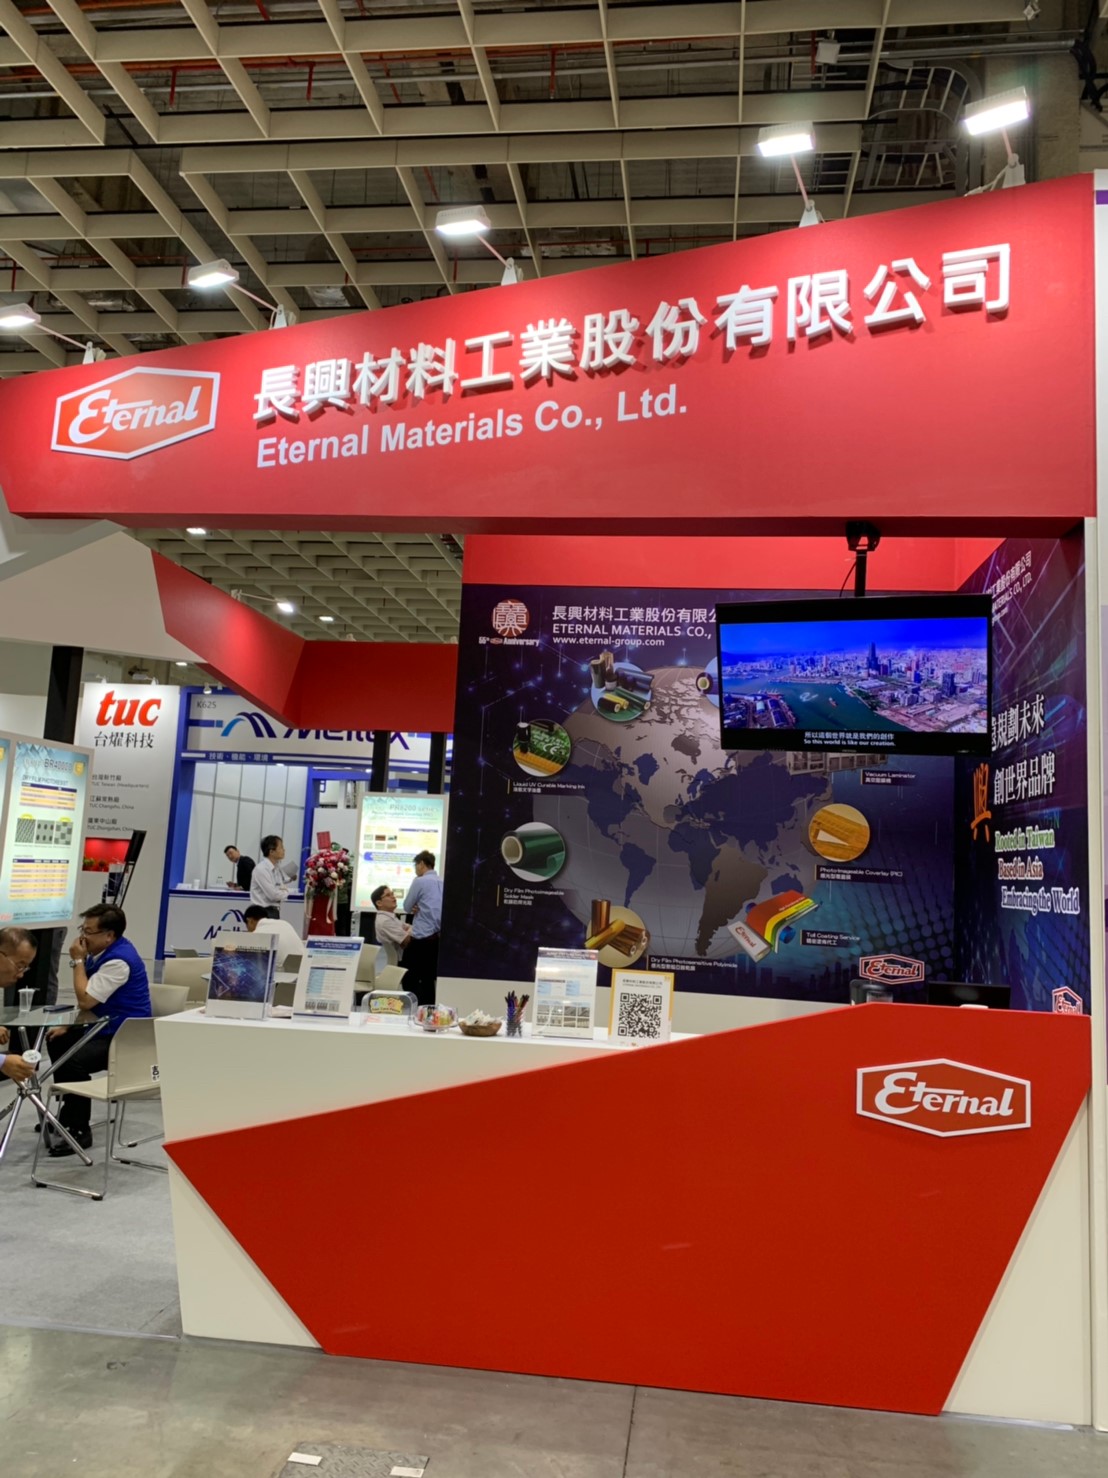 Eternal Corporation at Taiwan PCB Exhibition (TPCA Show 2019)